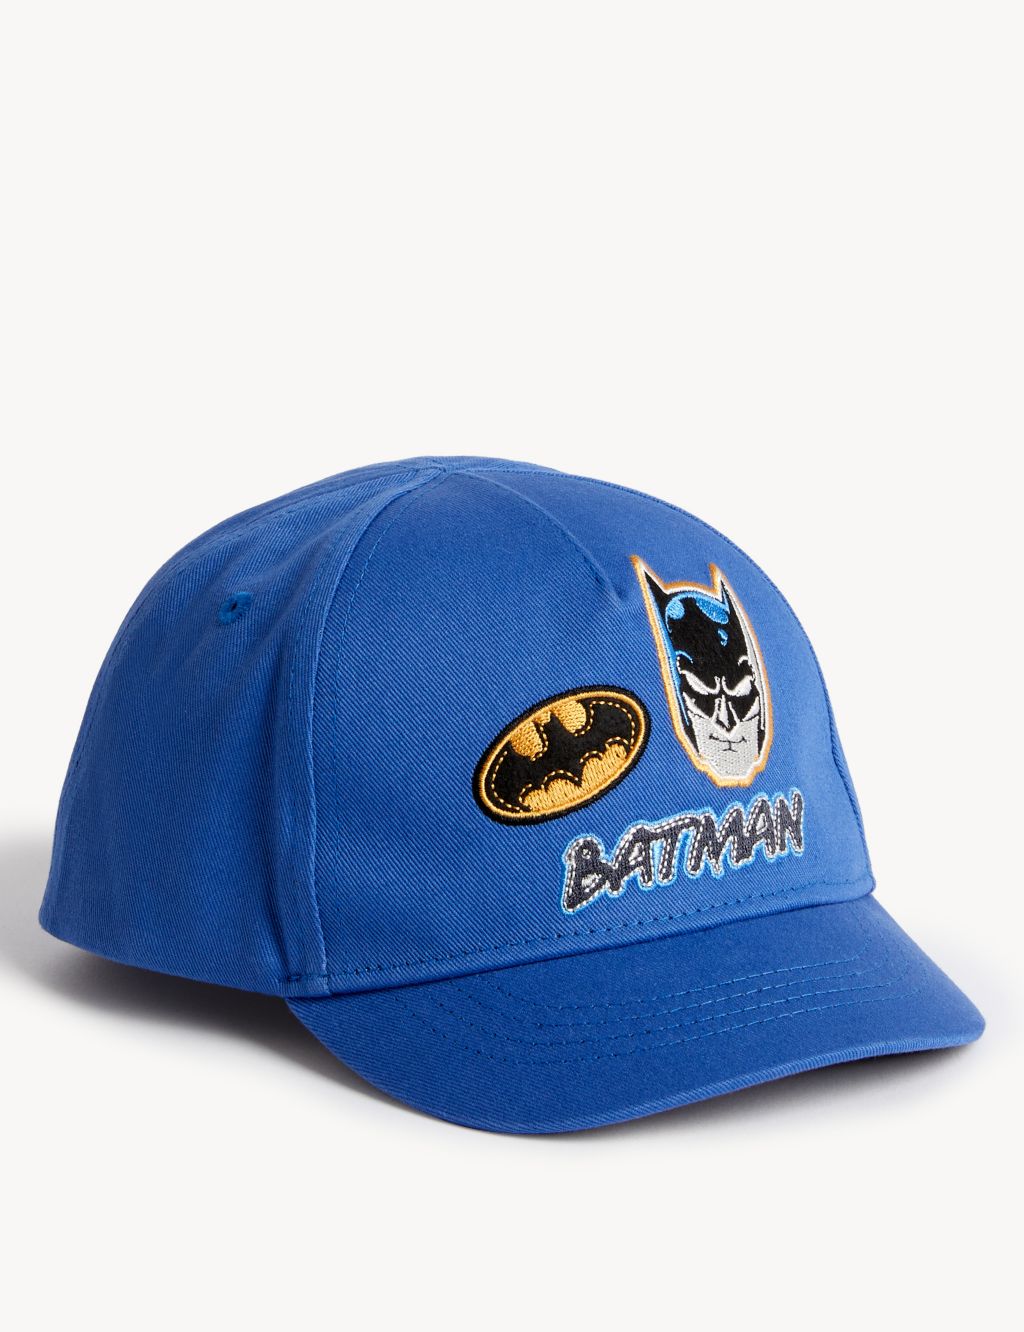 Kids' Pure Cotton Batman™ Baseball Cap (12 Mths - 6 Yrs) image 1